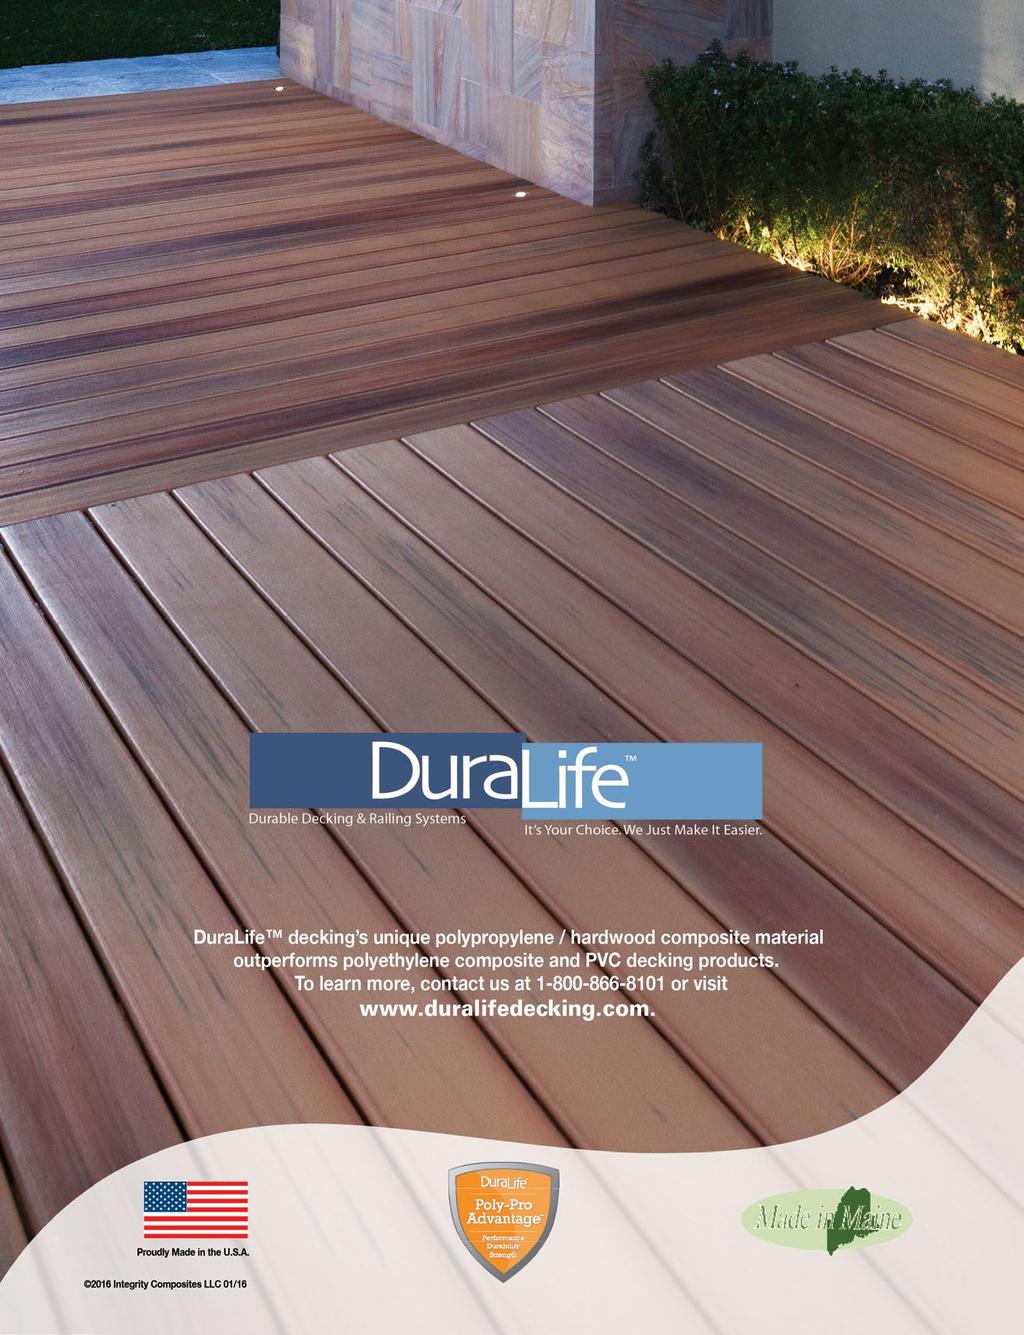 DuraLife decking s unique polypropylene / hardwood composite material outperforms polyethylene composite and PVC decking